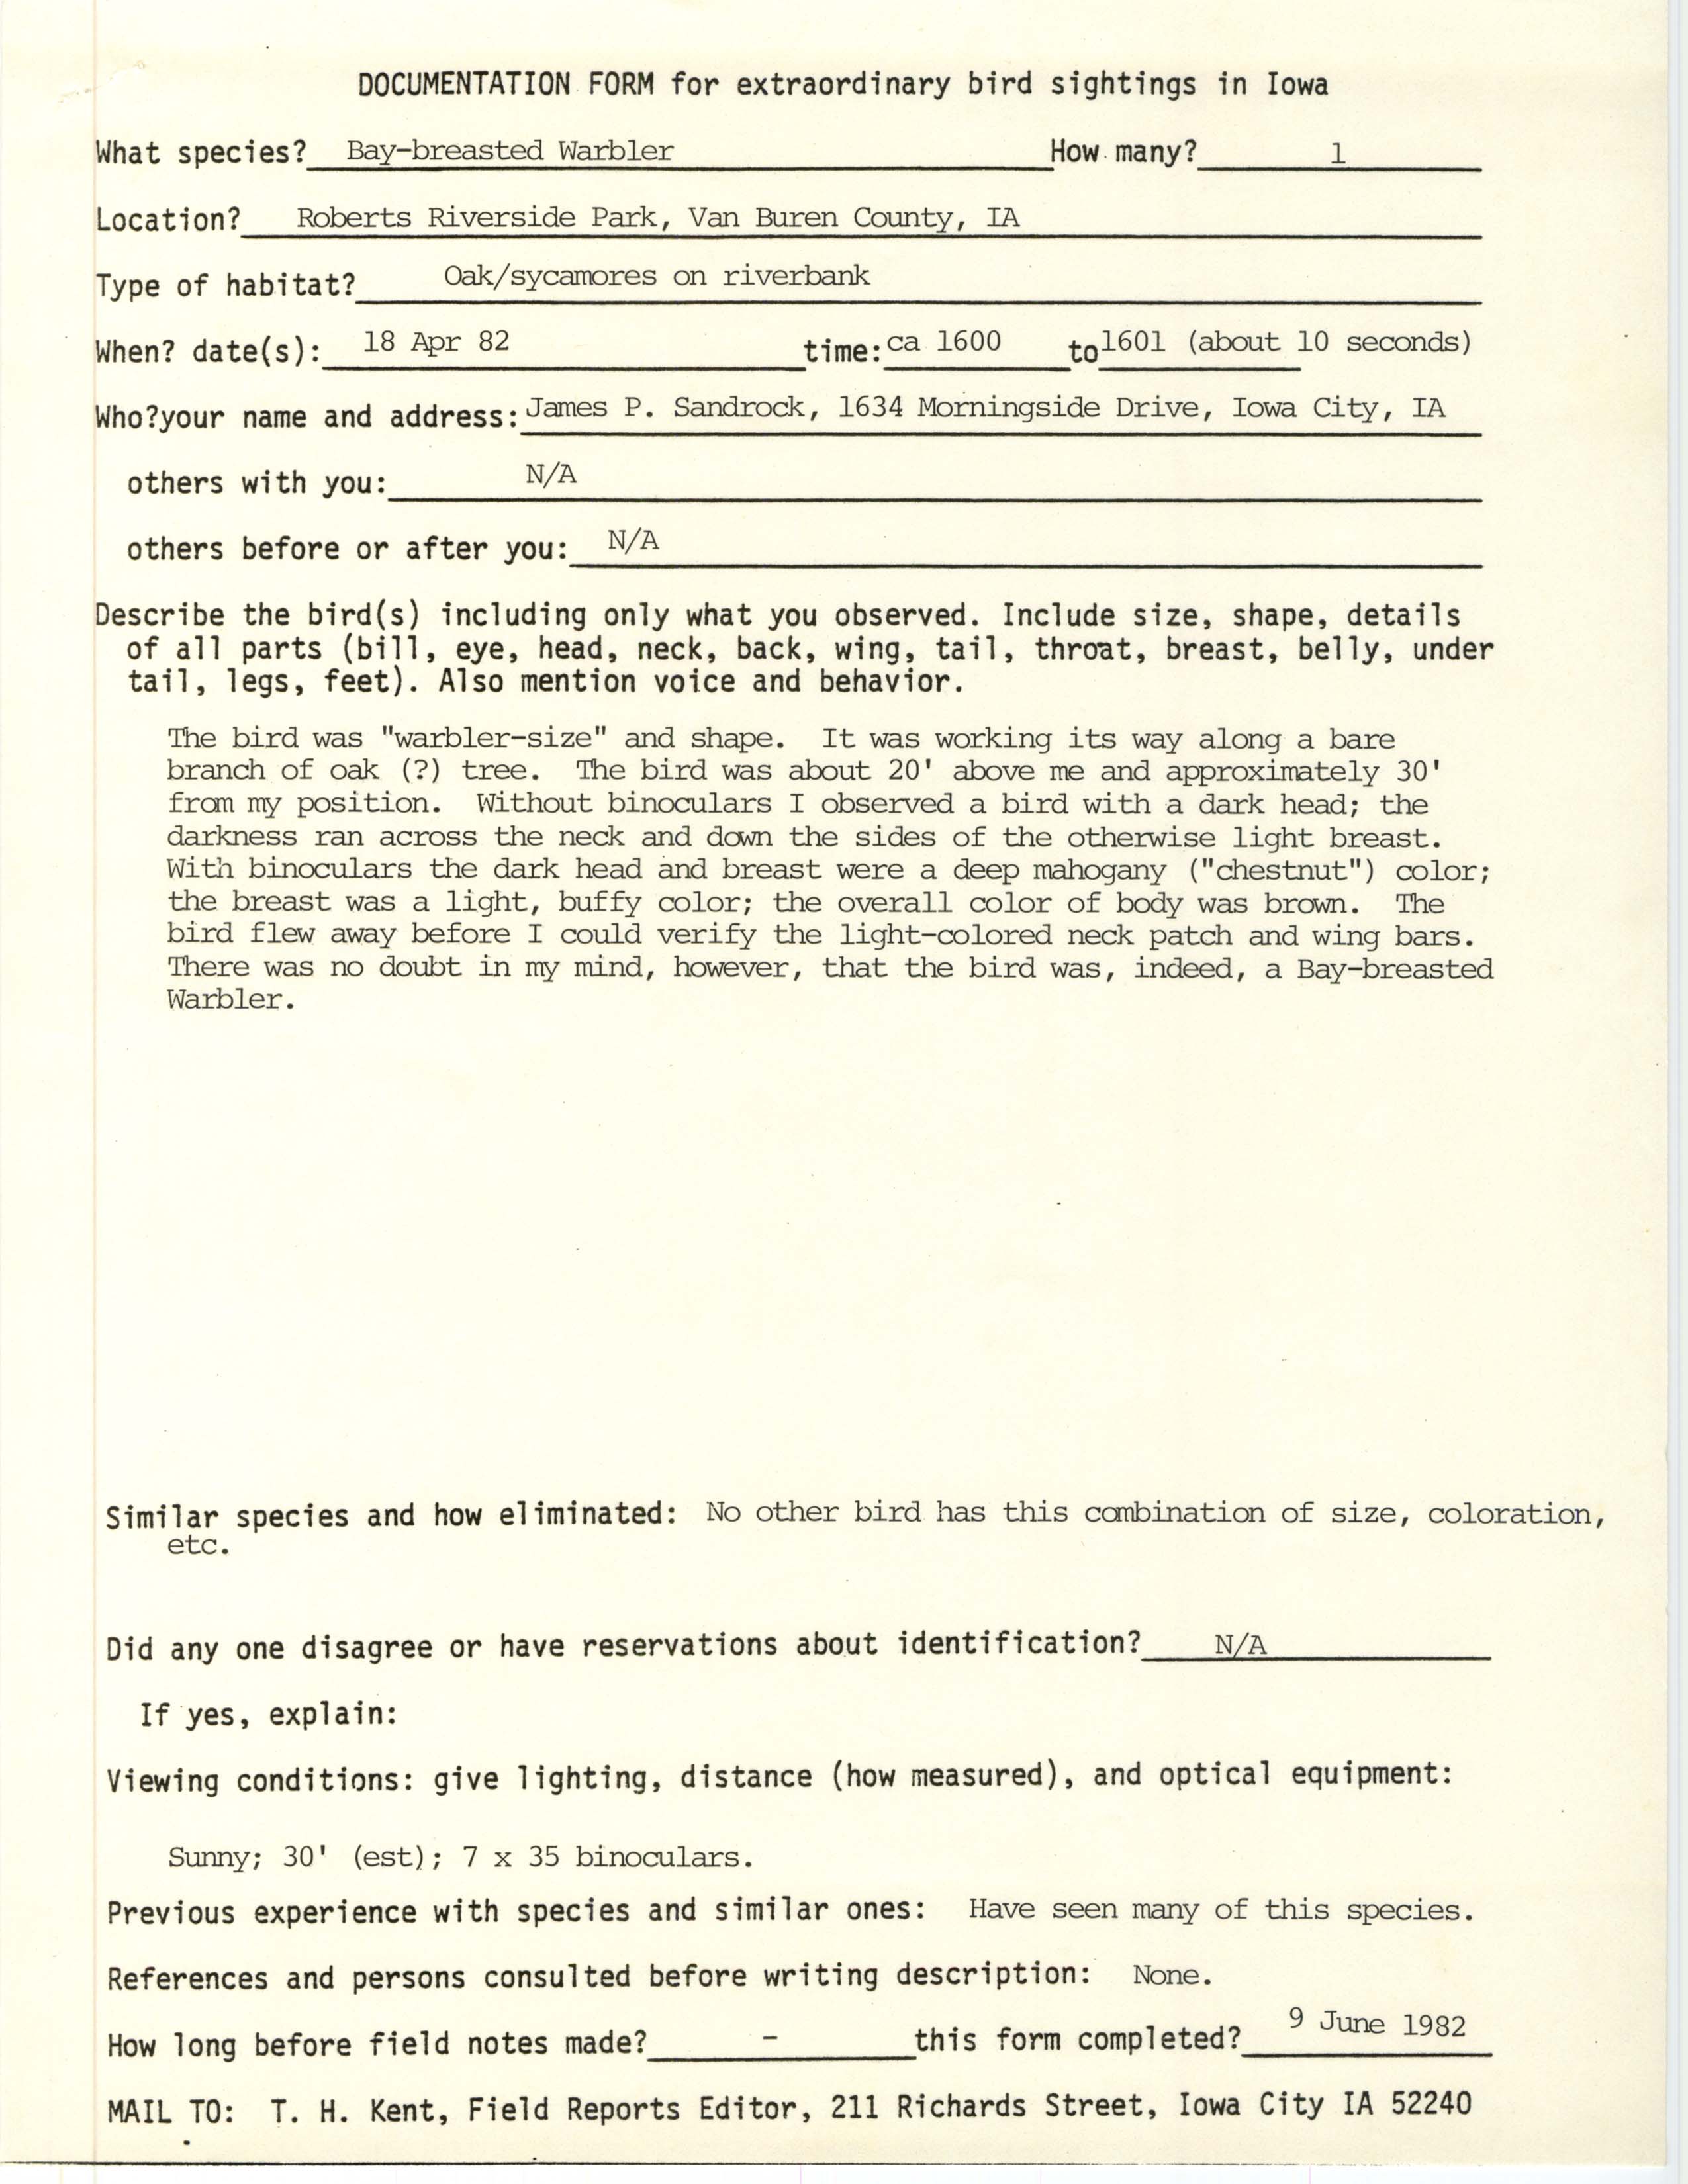 Rare bird documentation form for Bay-breasted Warbler at Roberts Riverside Park in Van Buren County, 1982